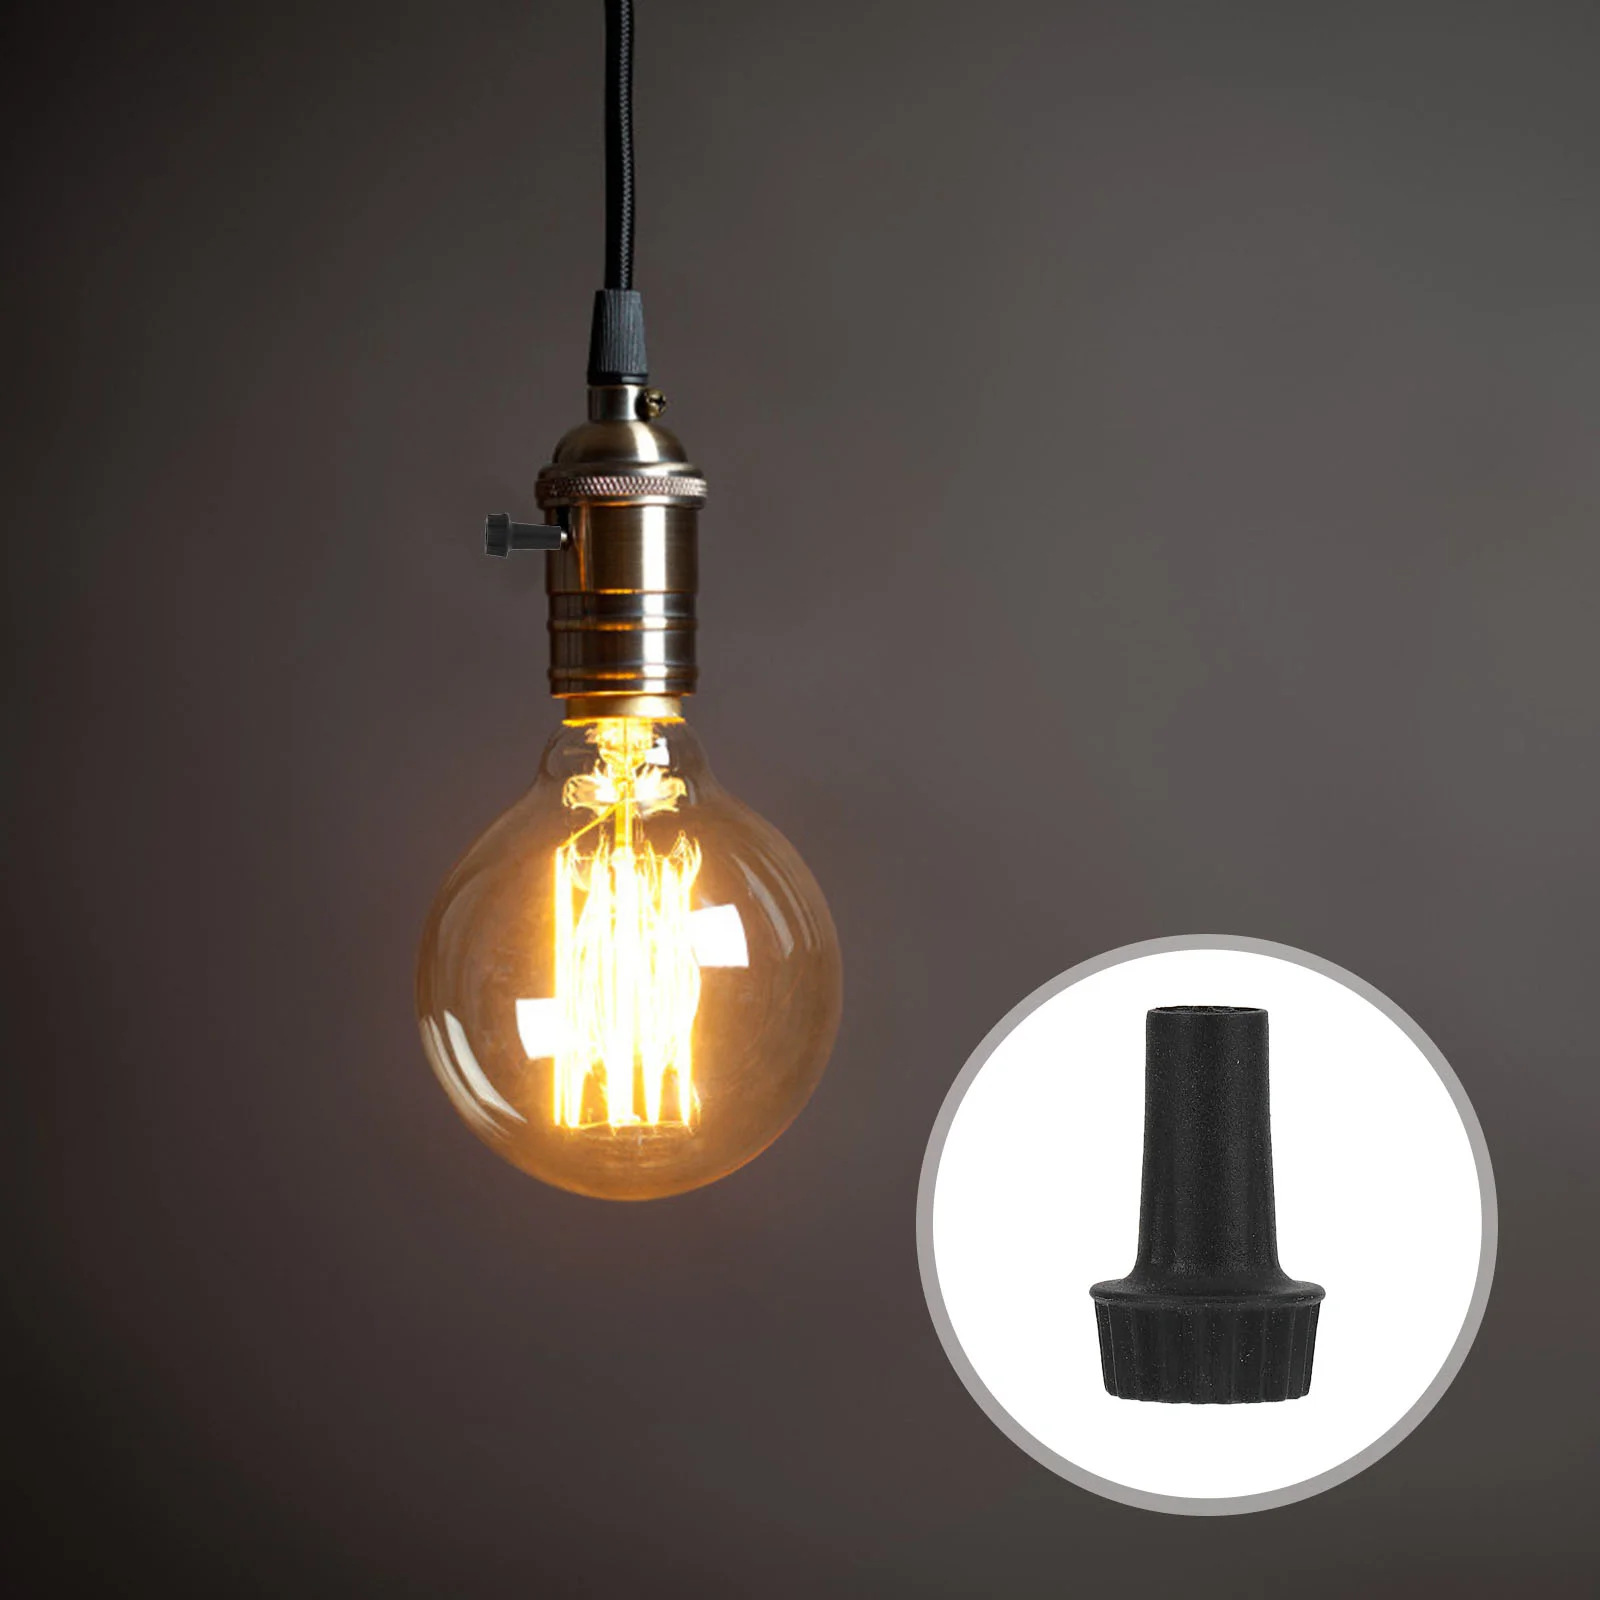 

20 Pcs UL Twists Light Knobs Accessories Socket Bulb Replacement Lamp to Turn Plastic